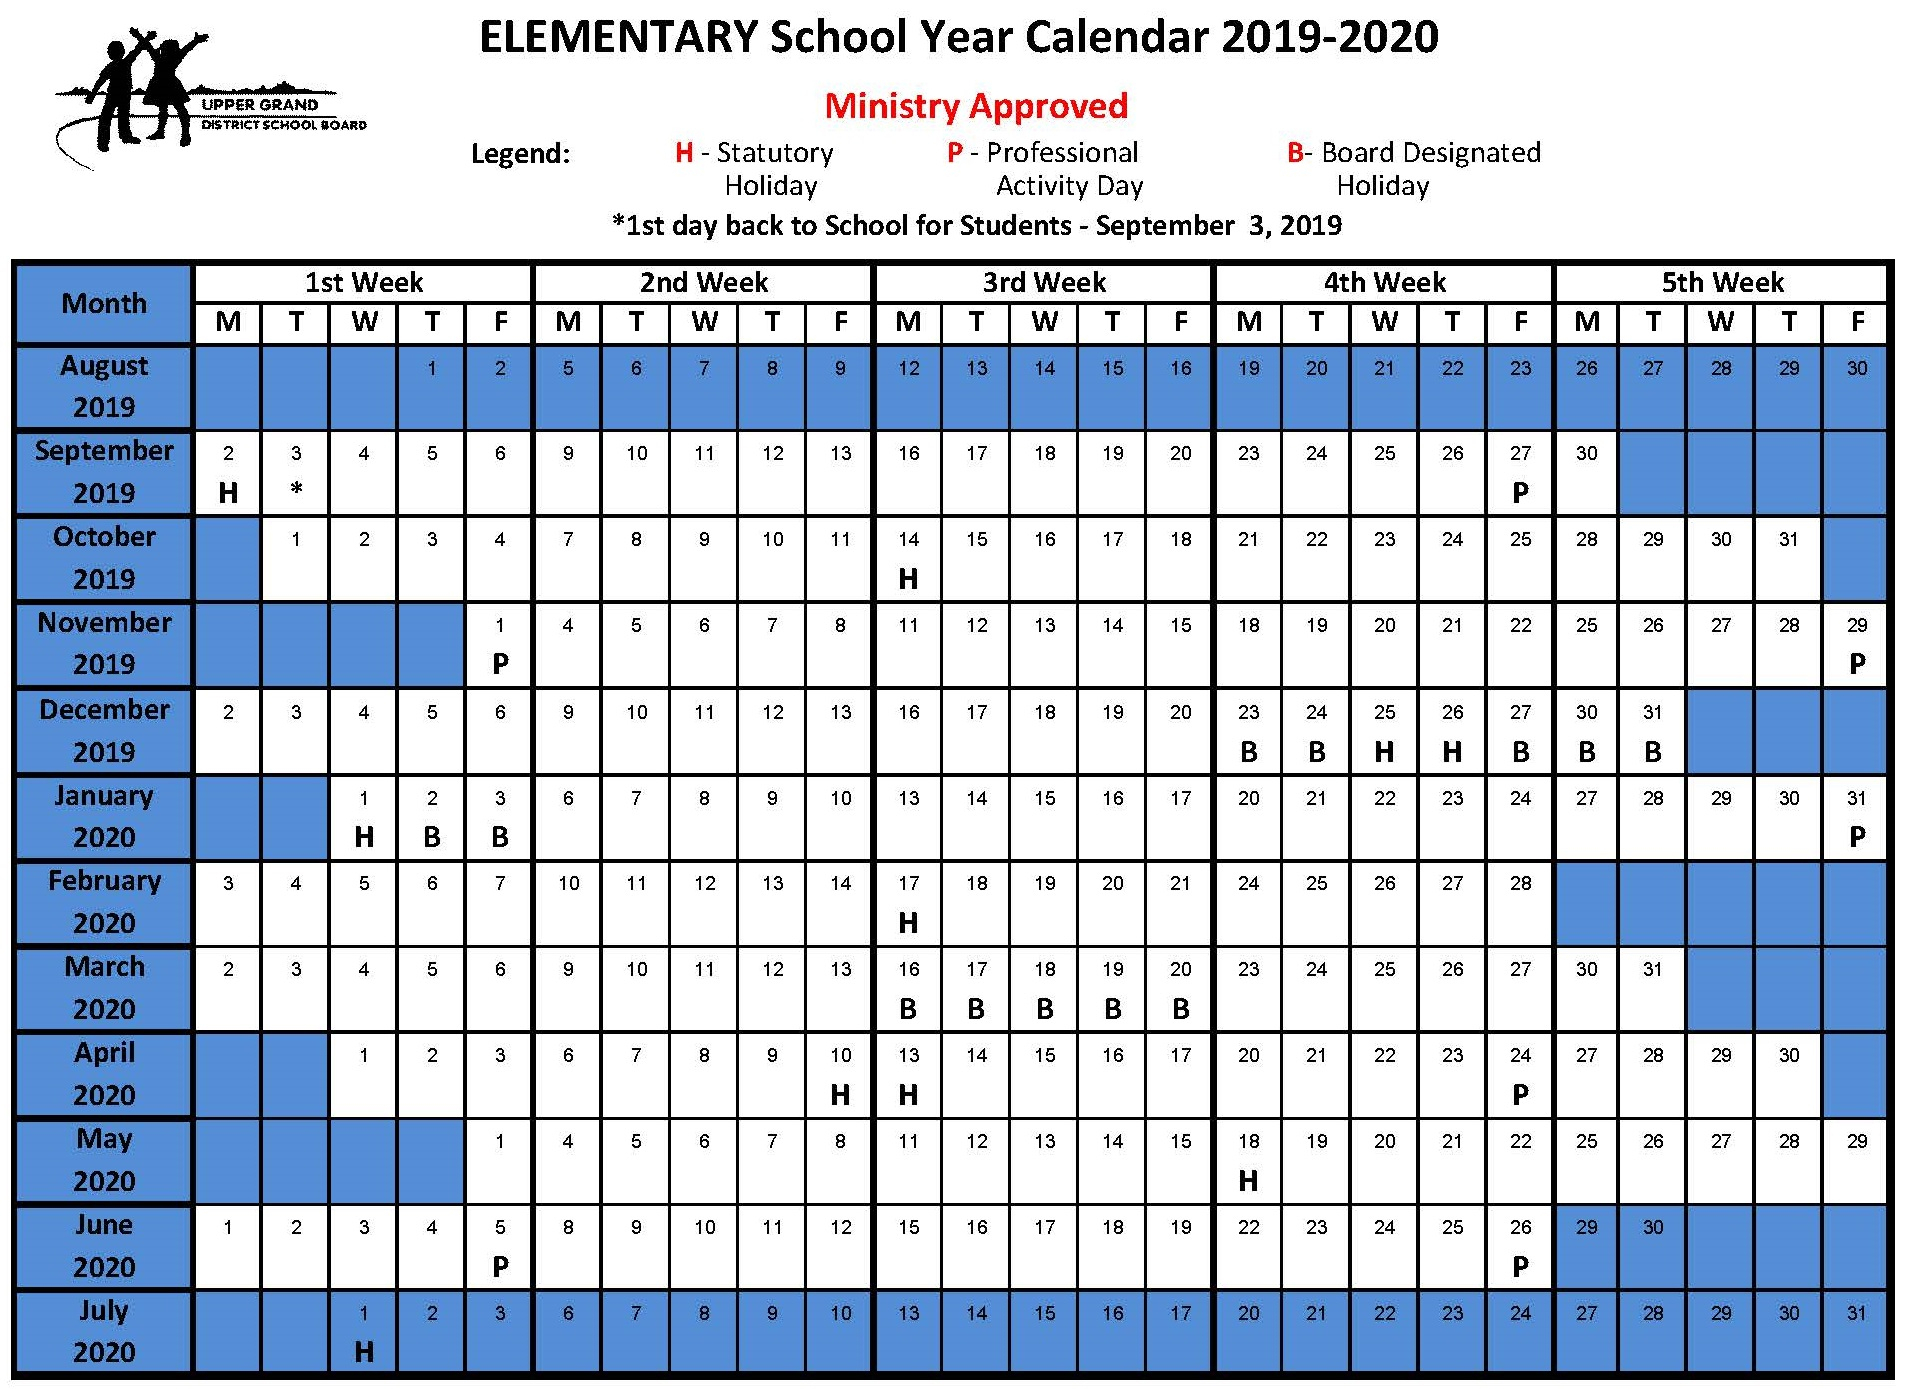 Elementary School Year Calendar 2019-2020 - Upper Grand